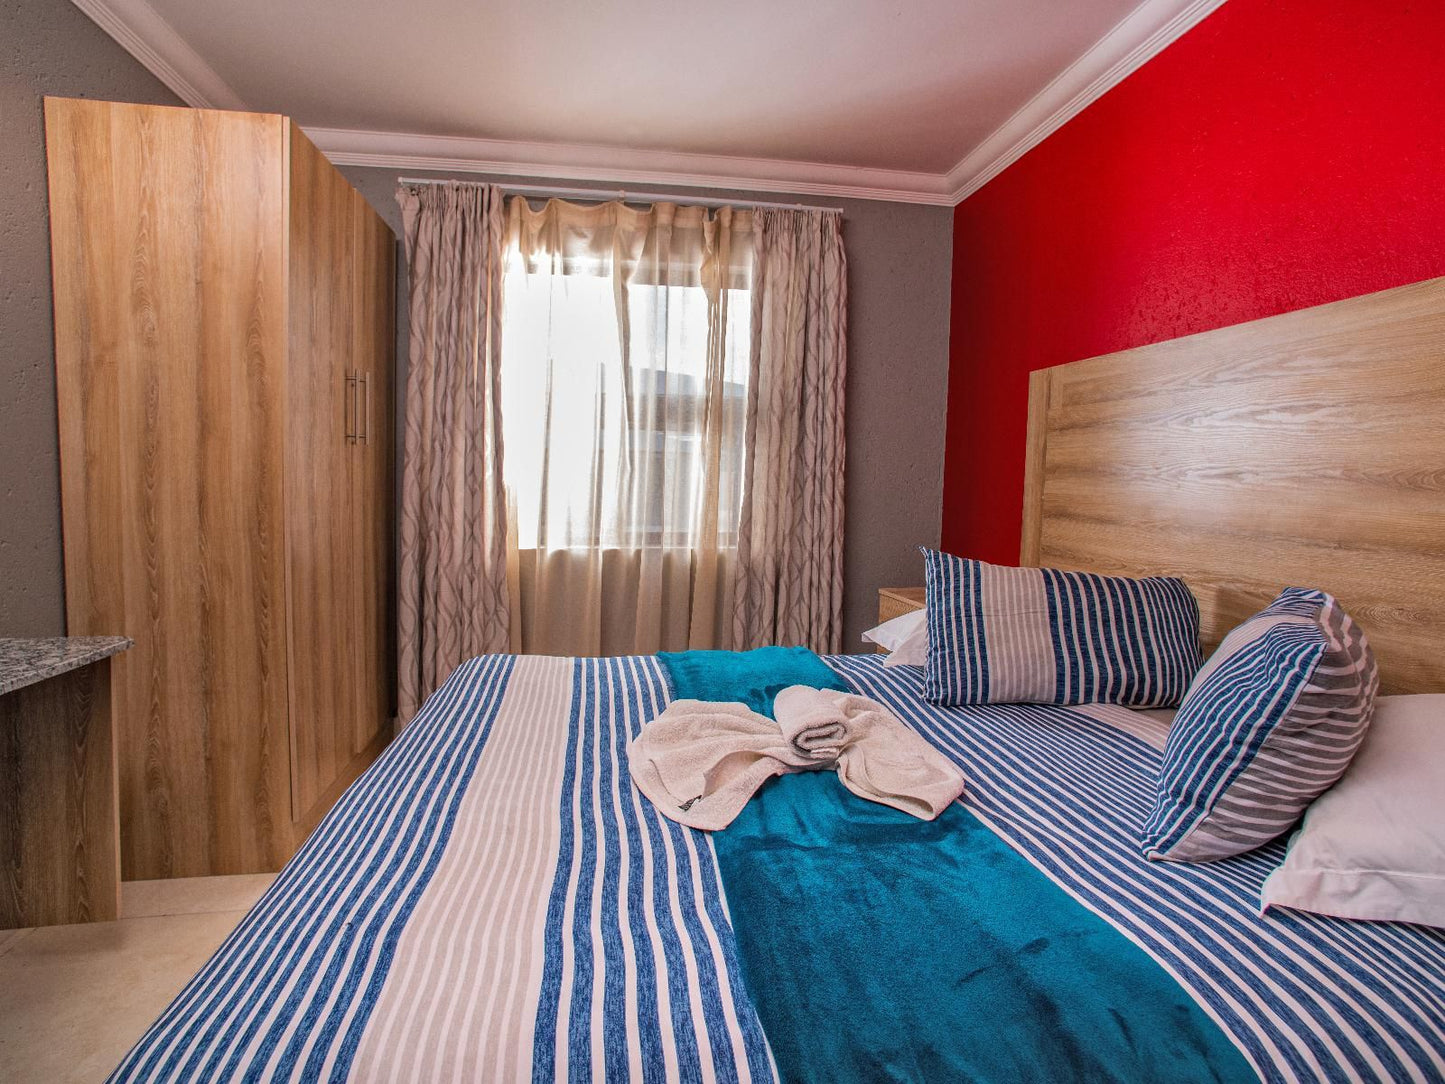 Khayalami Hotels Standerton Standerton Mpumalanga South Africa Bedroom